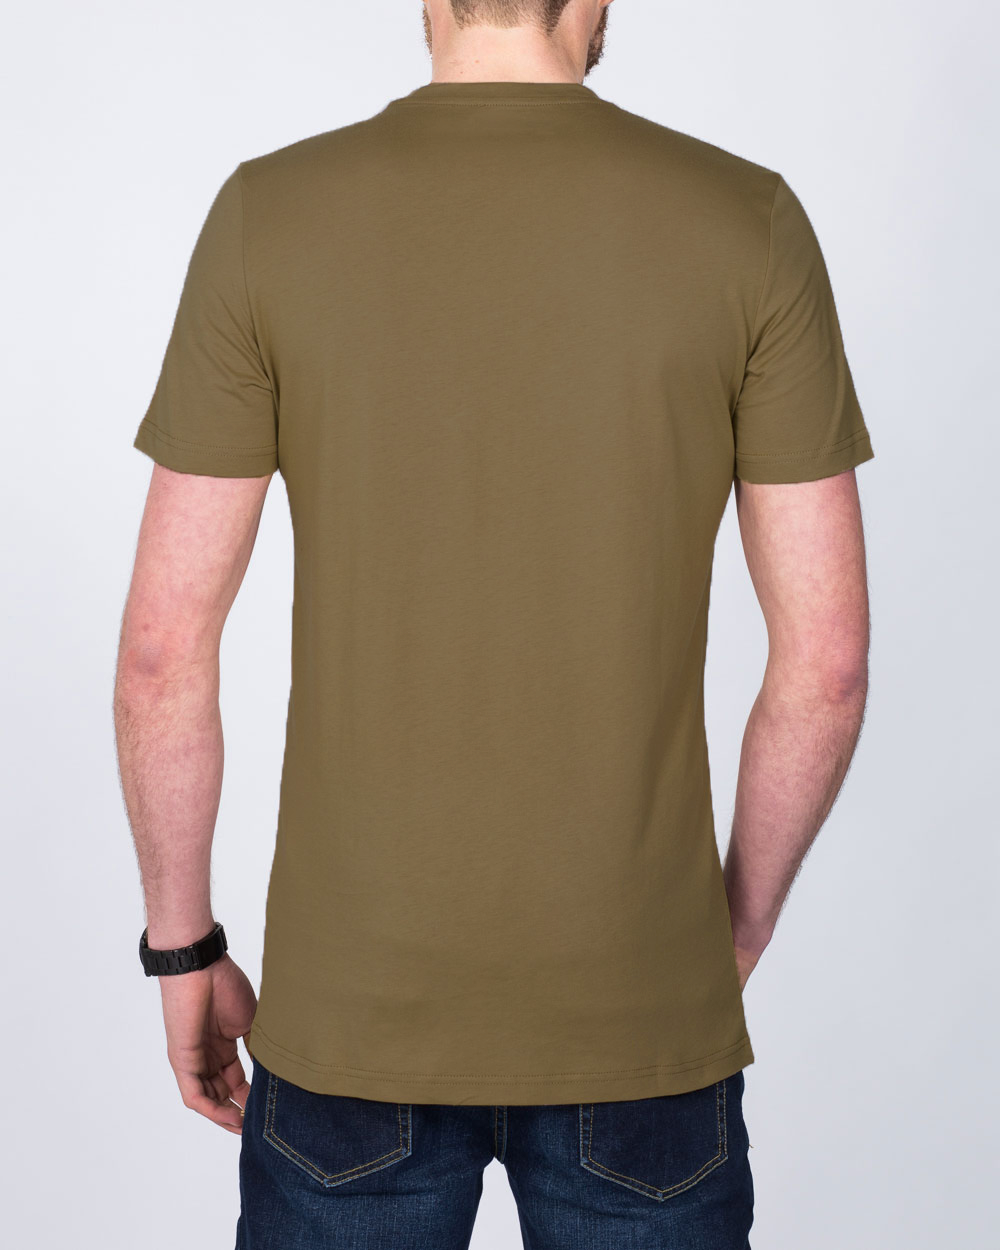 2t Tall T-Shirt (tan brown)